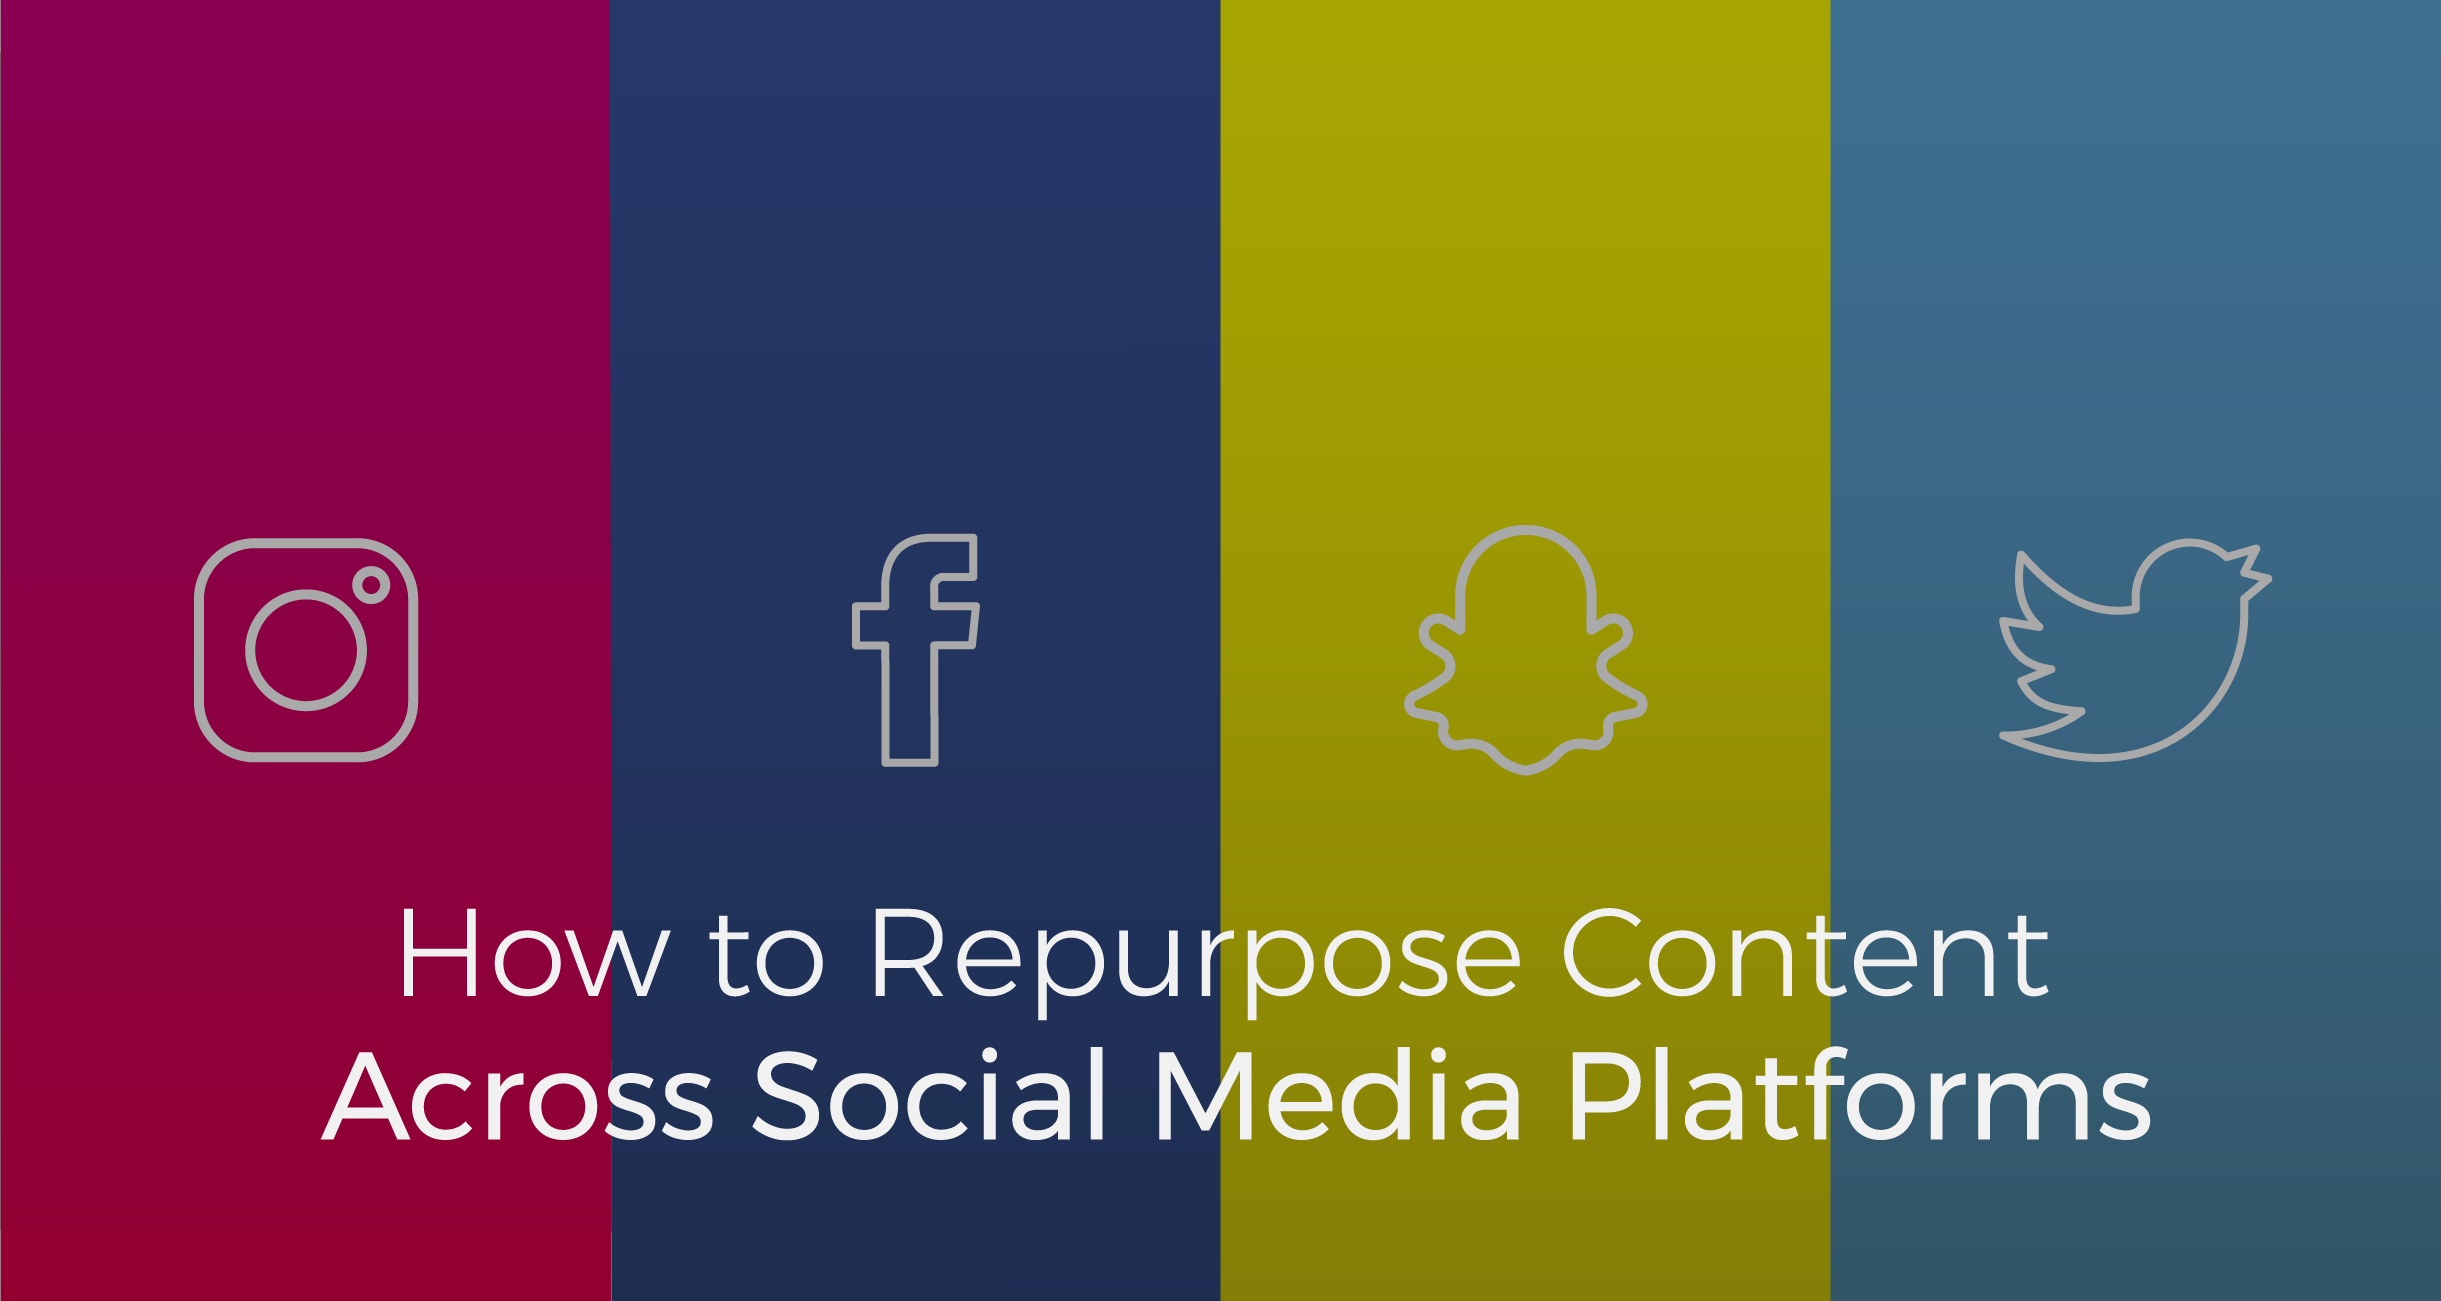 How to repurpose content across social media platforms